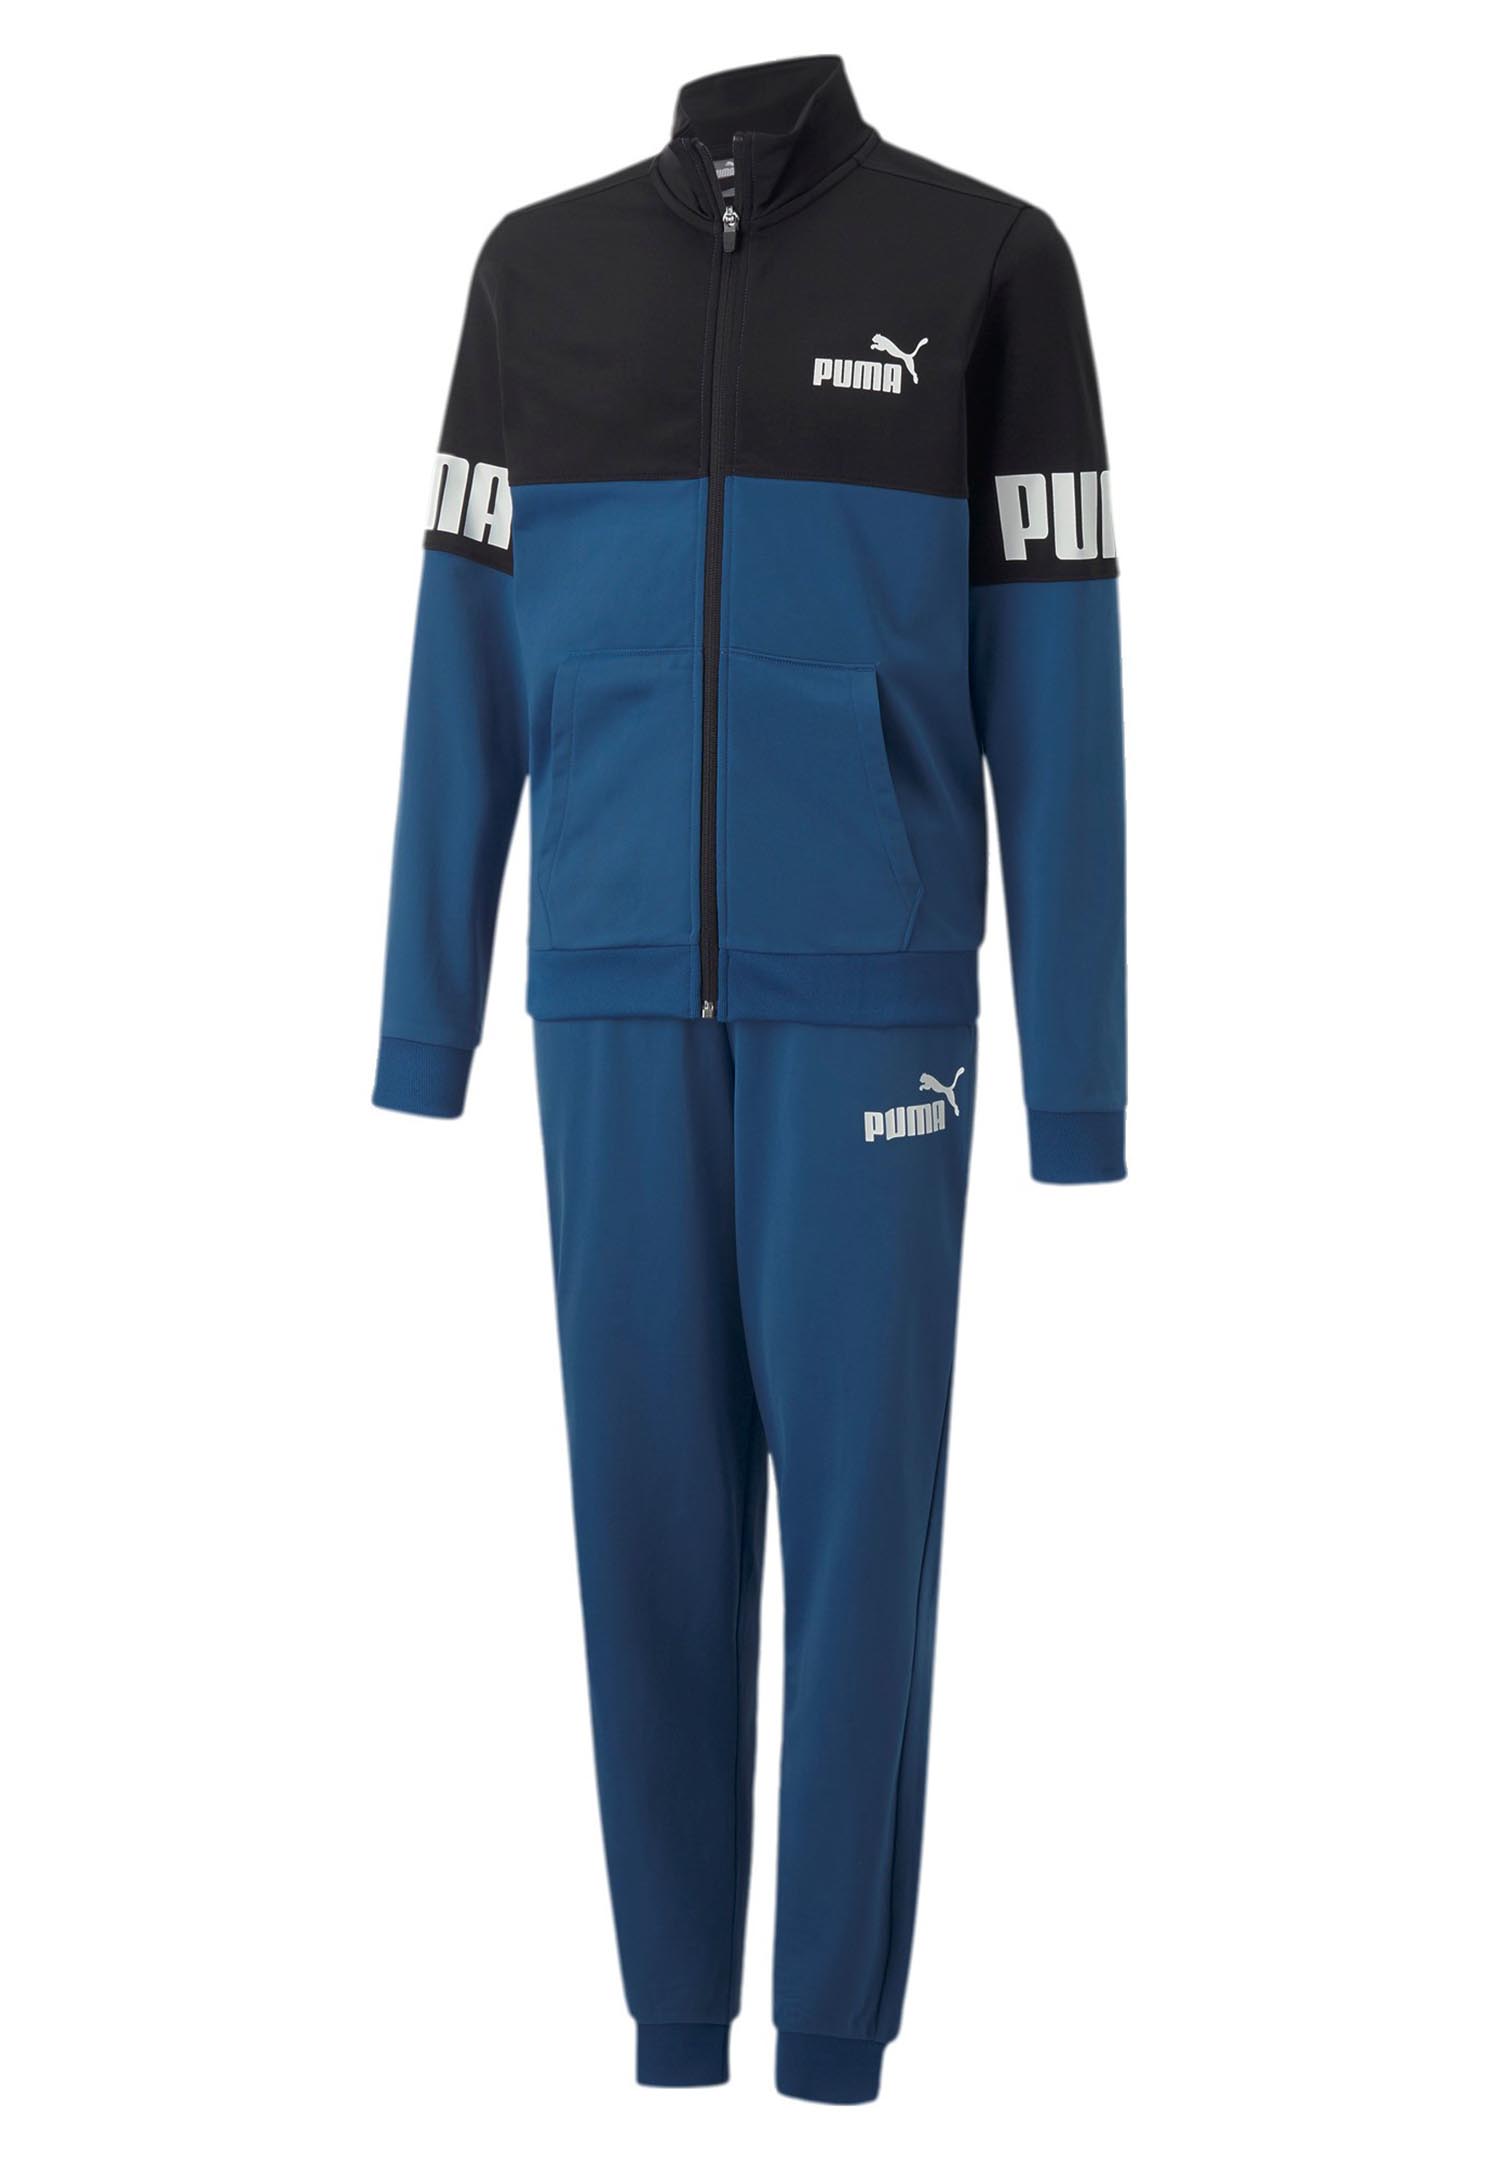 Puma Power Poly Suit B Kinder Unisex Trainingsanzug Sportanzug 670115 17 Blau von Puma